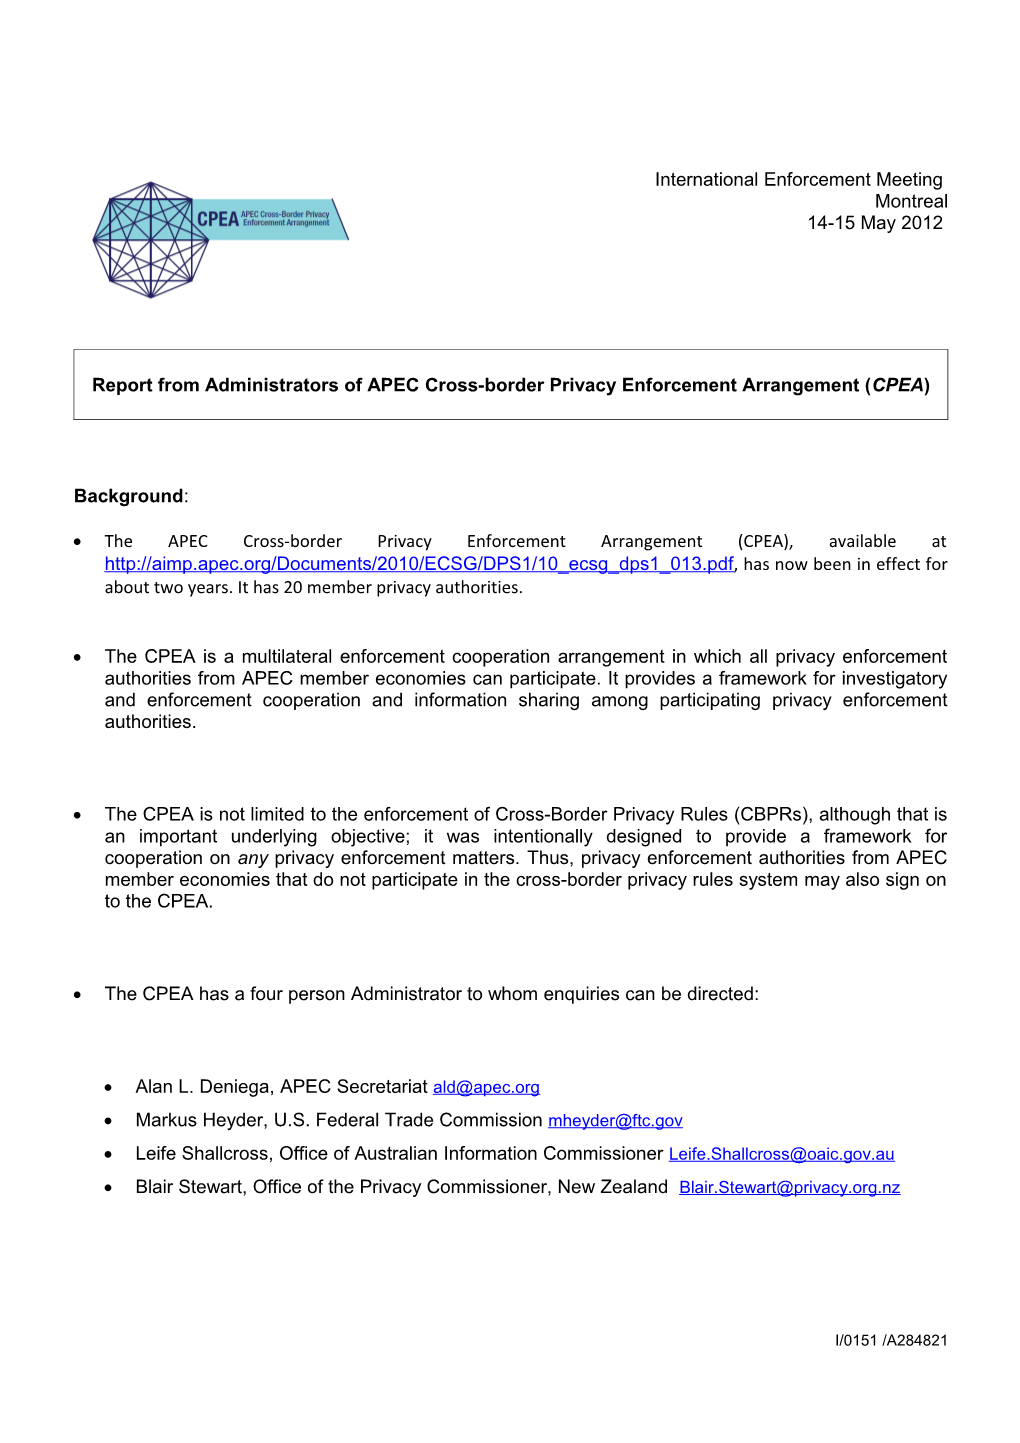 Report from Administrators of APEC Cross-Border Privacy Enforcement Arrangement (CPEA)